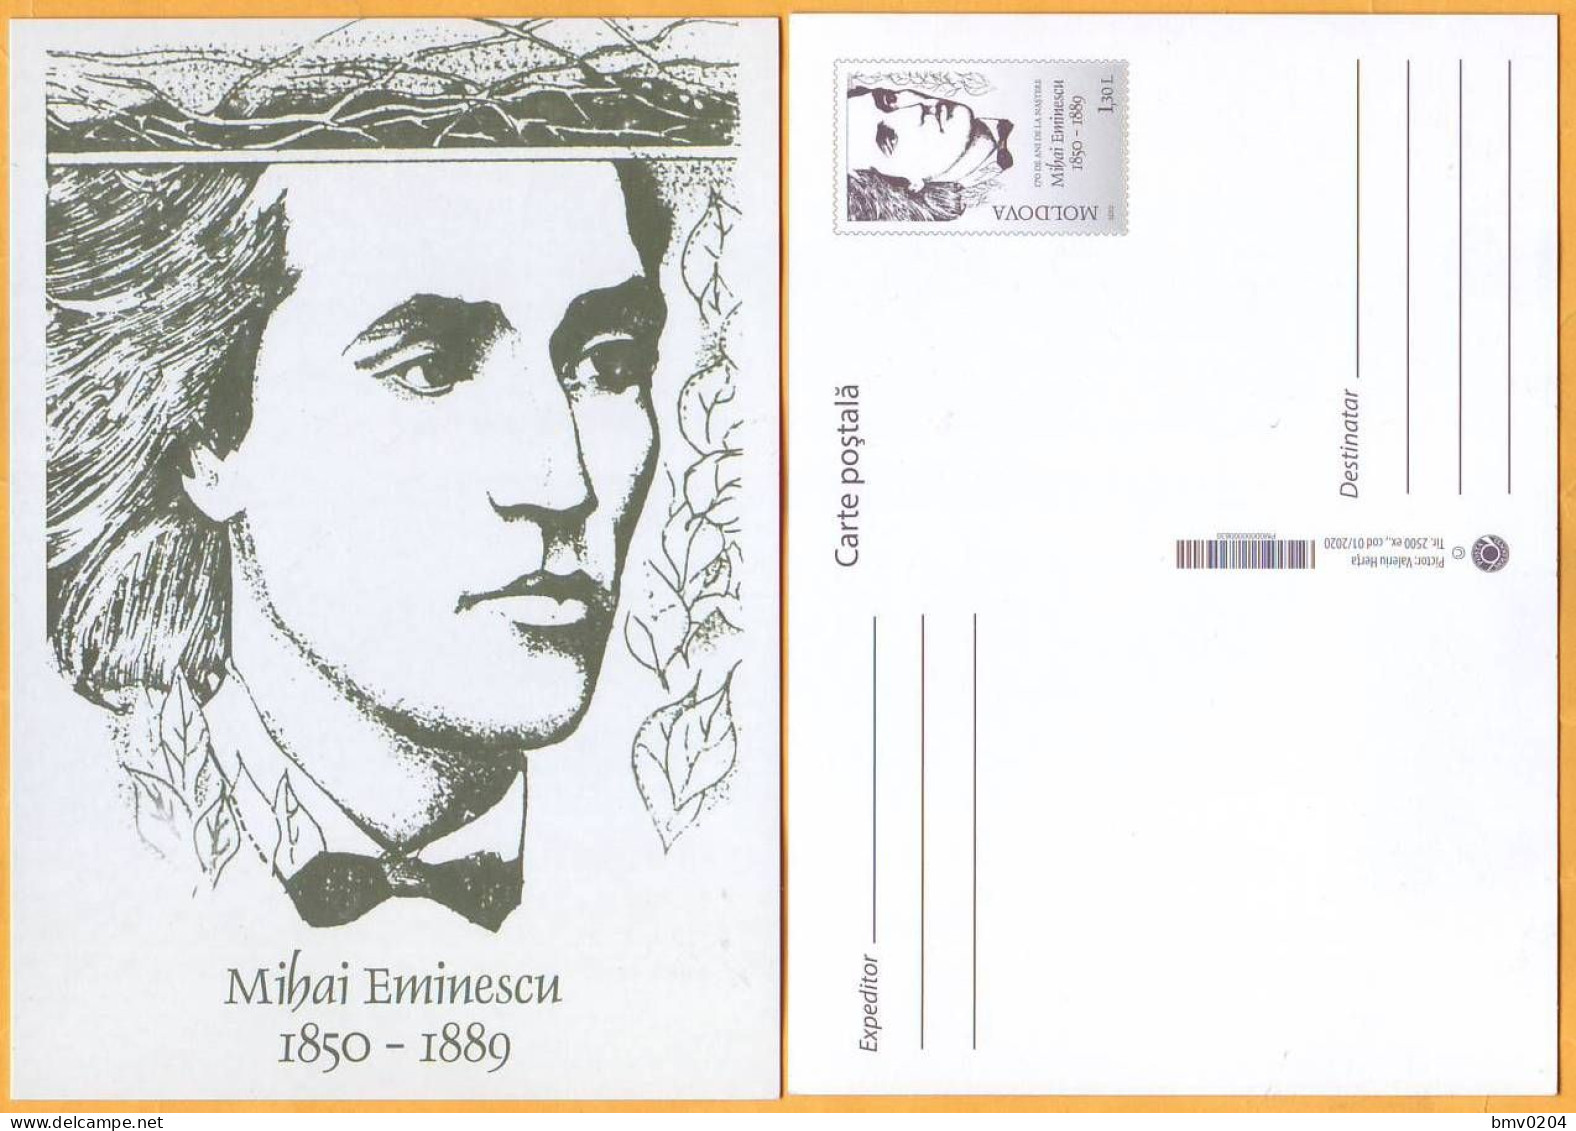 2020 Moldova Moldavie Moldau  Eminescu  Stamped Stationery Postcard Mint - Scrittori